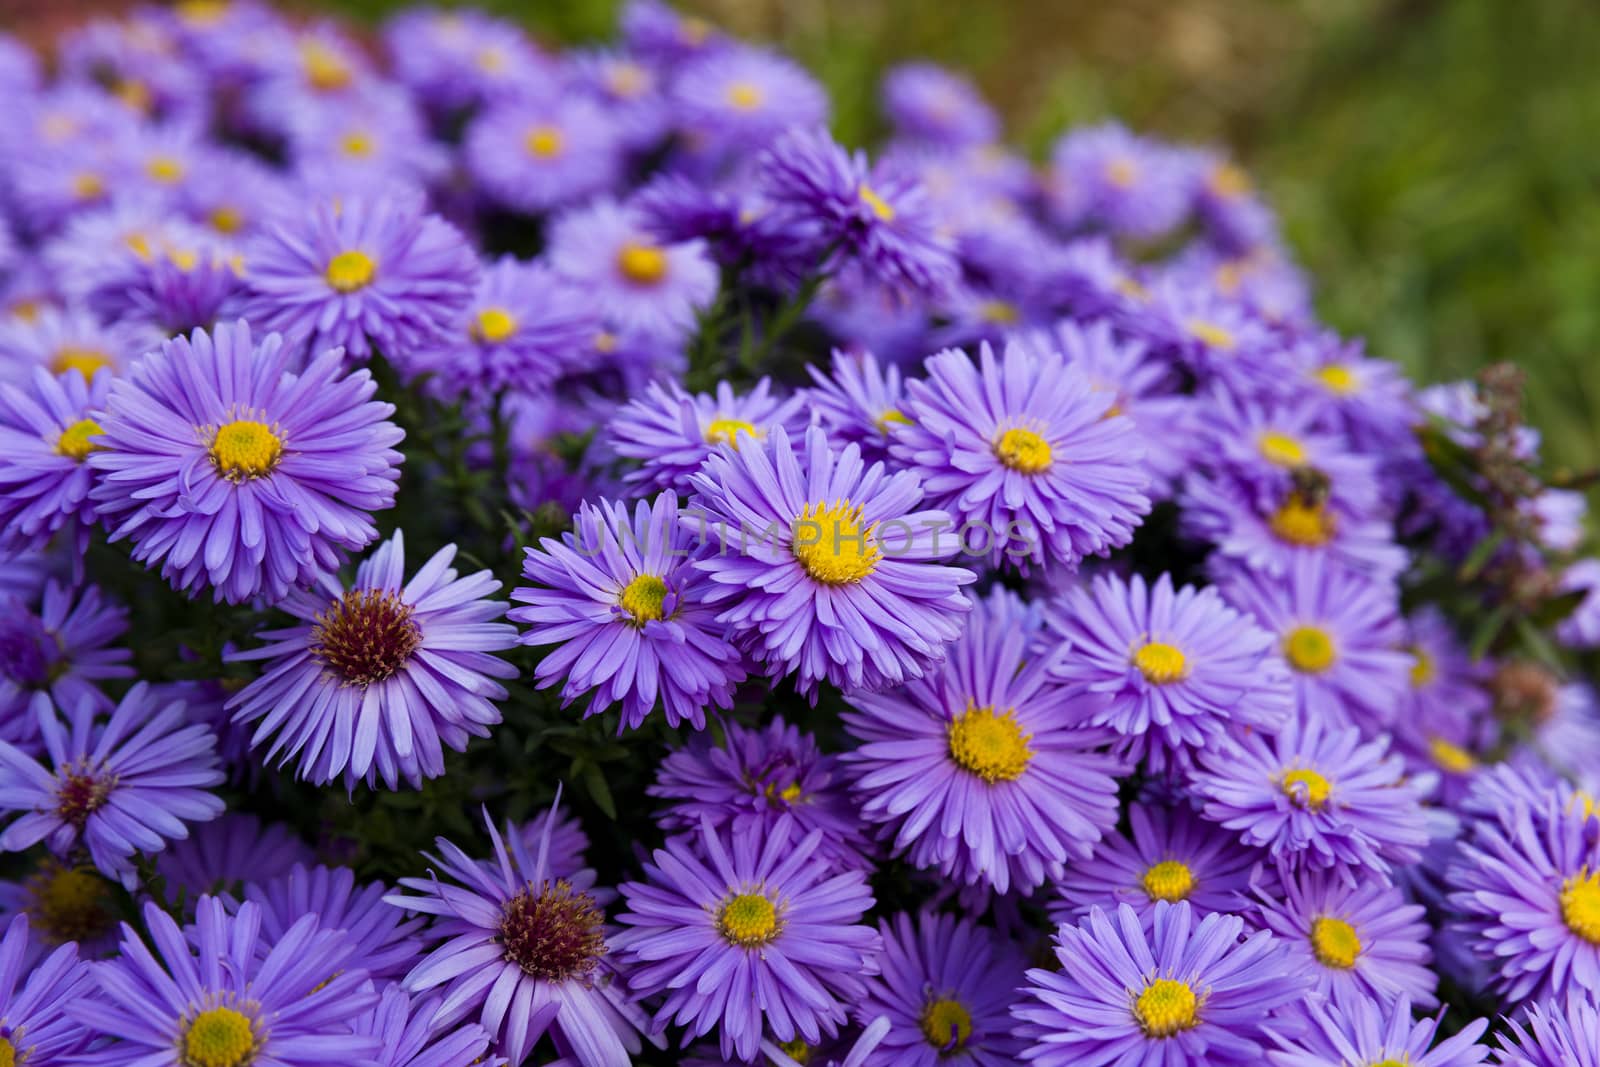   purple flowers, photographed close up. autumn season